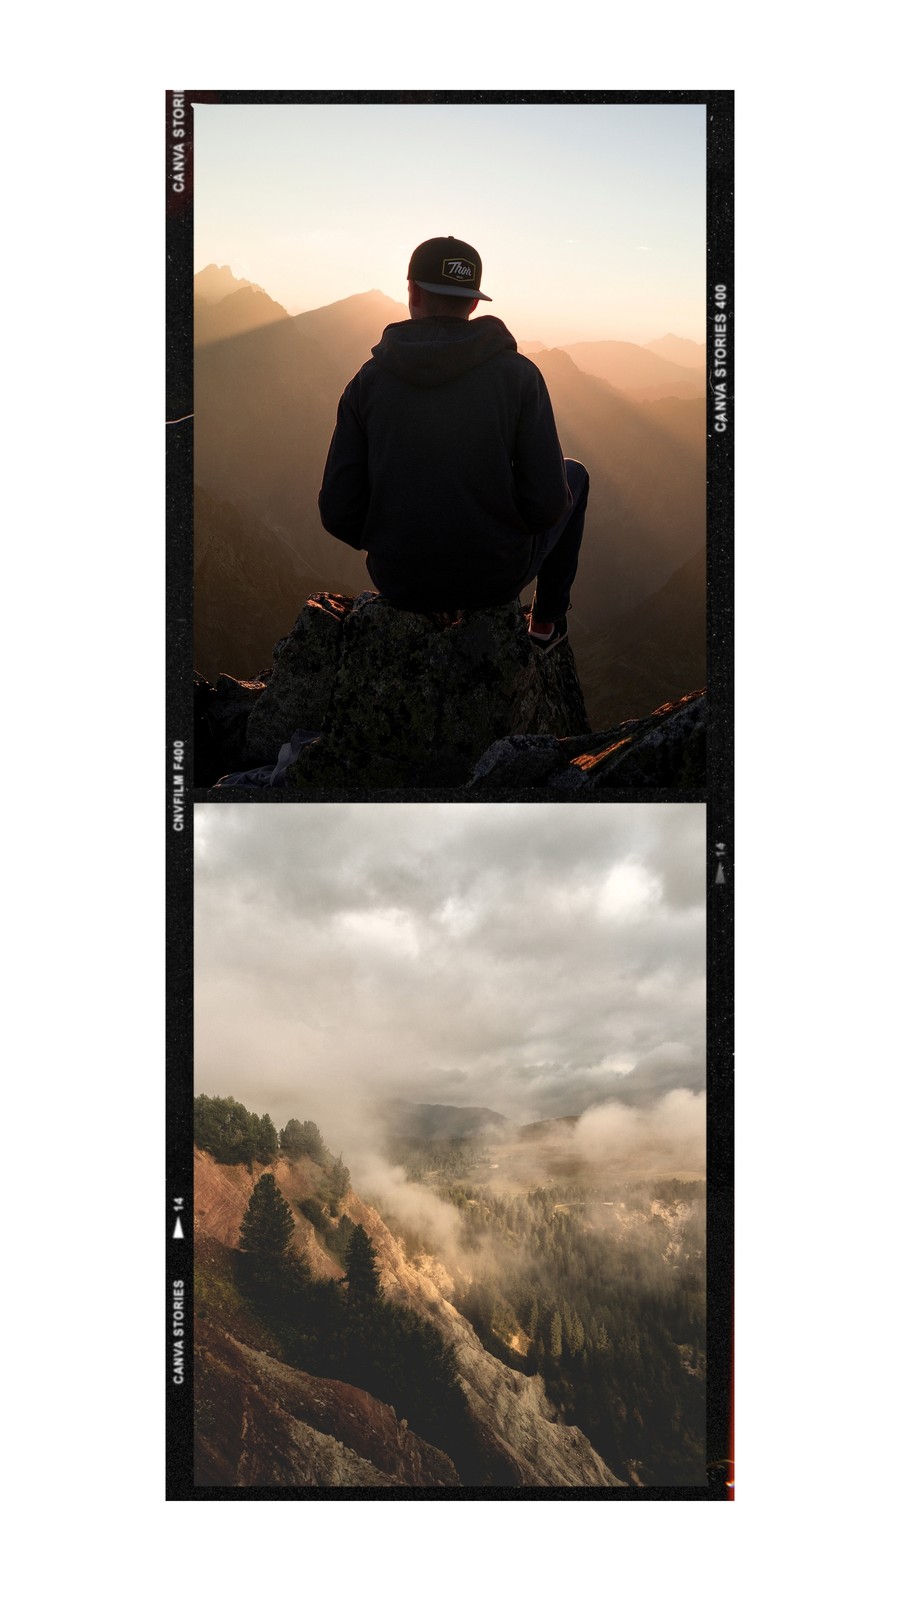 Cerita Instagram Bingkai Polaroid/Film Wisata Putih dan Hitam